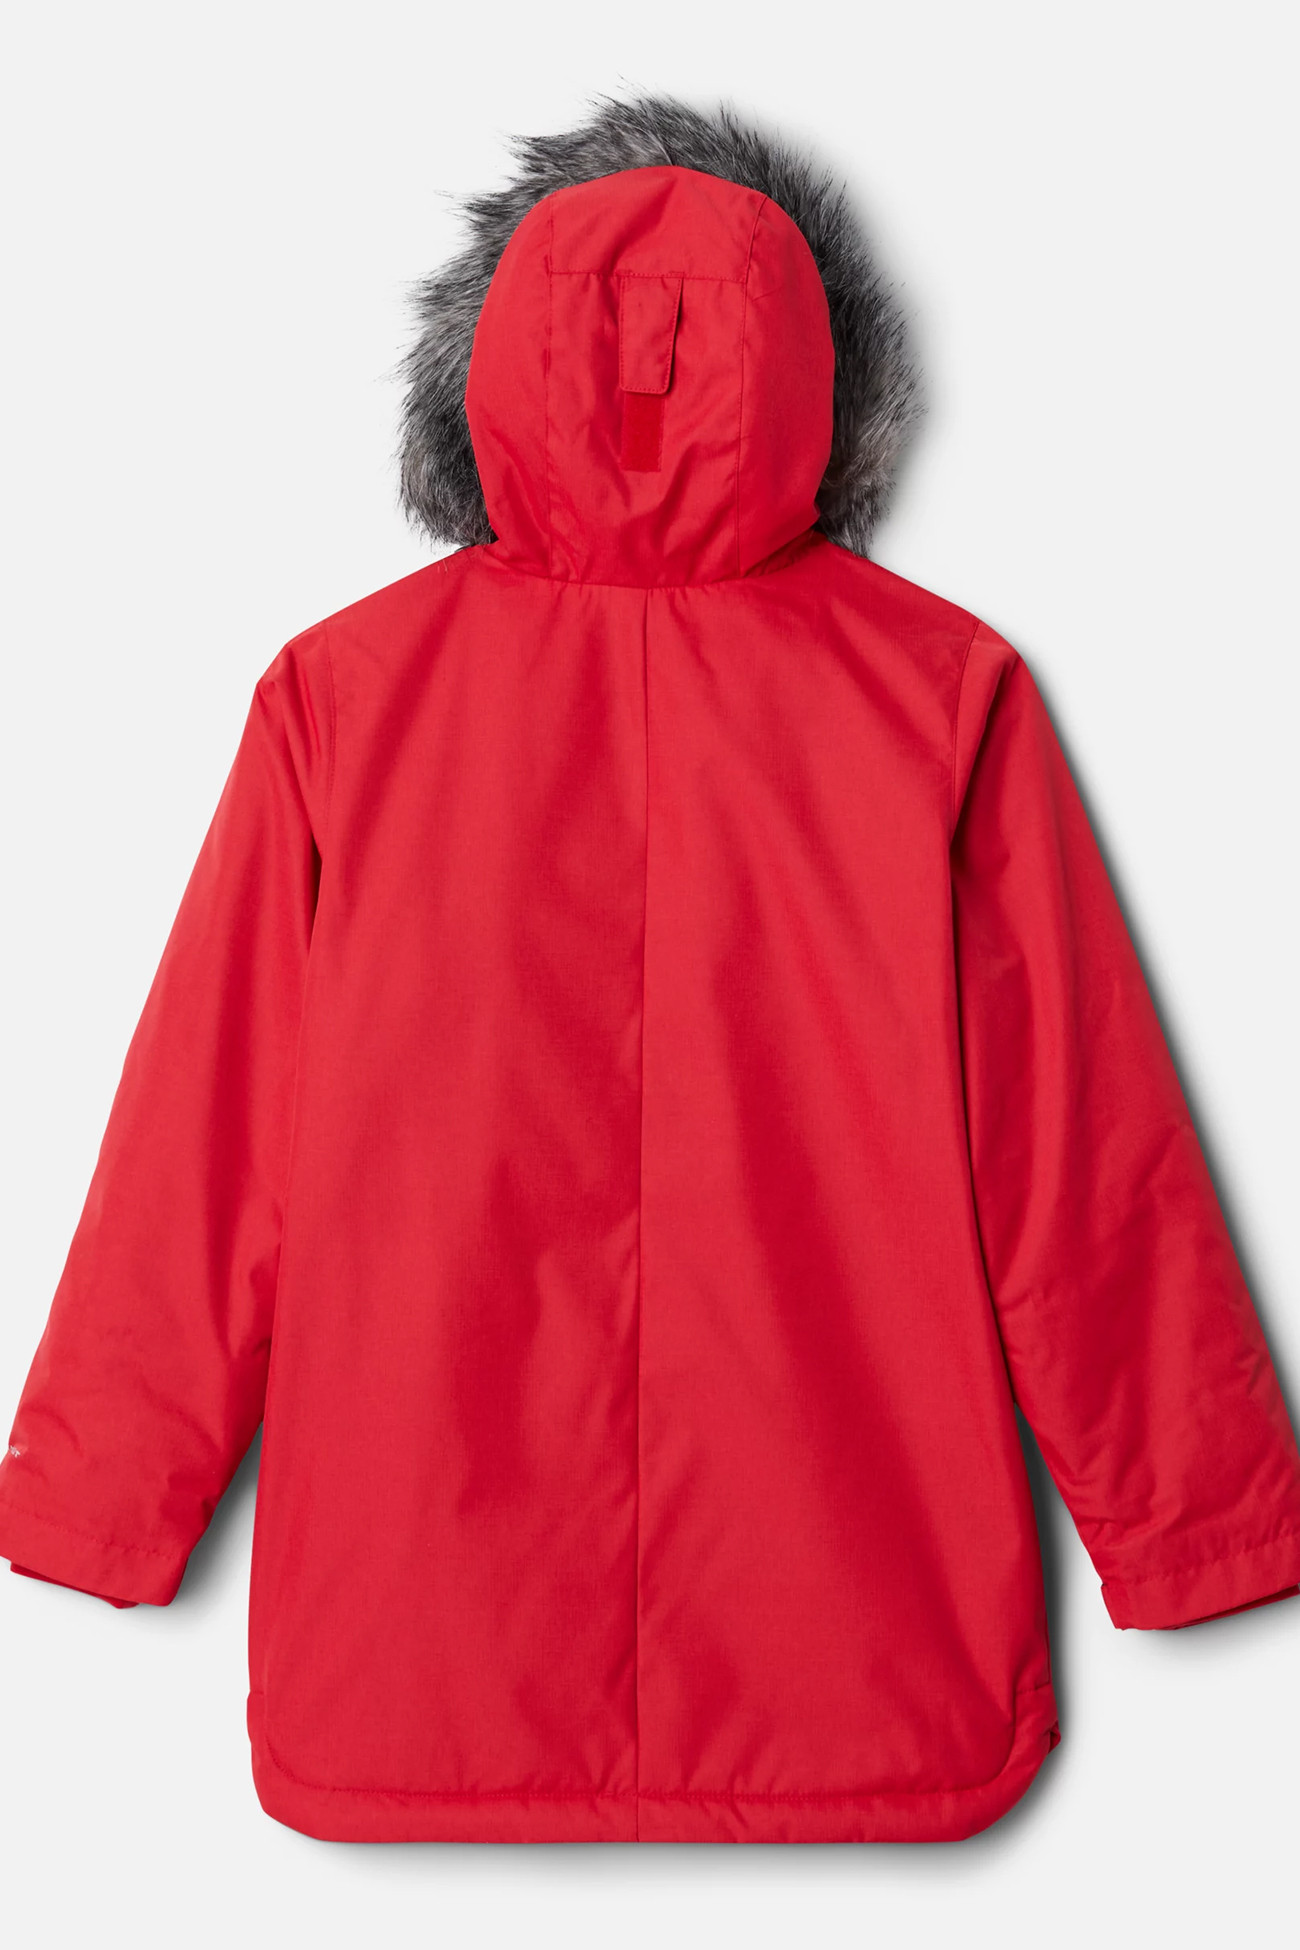 Куртка для дівчат Columbia  Suttle Mountain™ Long Insulated Jkt червона 1954571-658 изображение 2